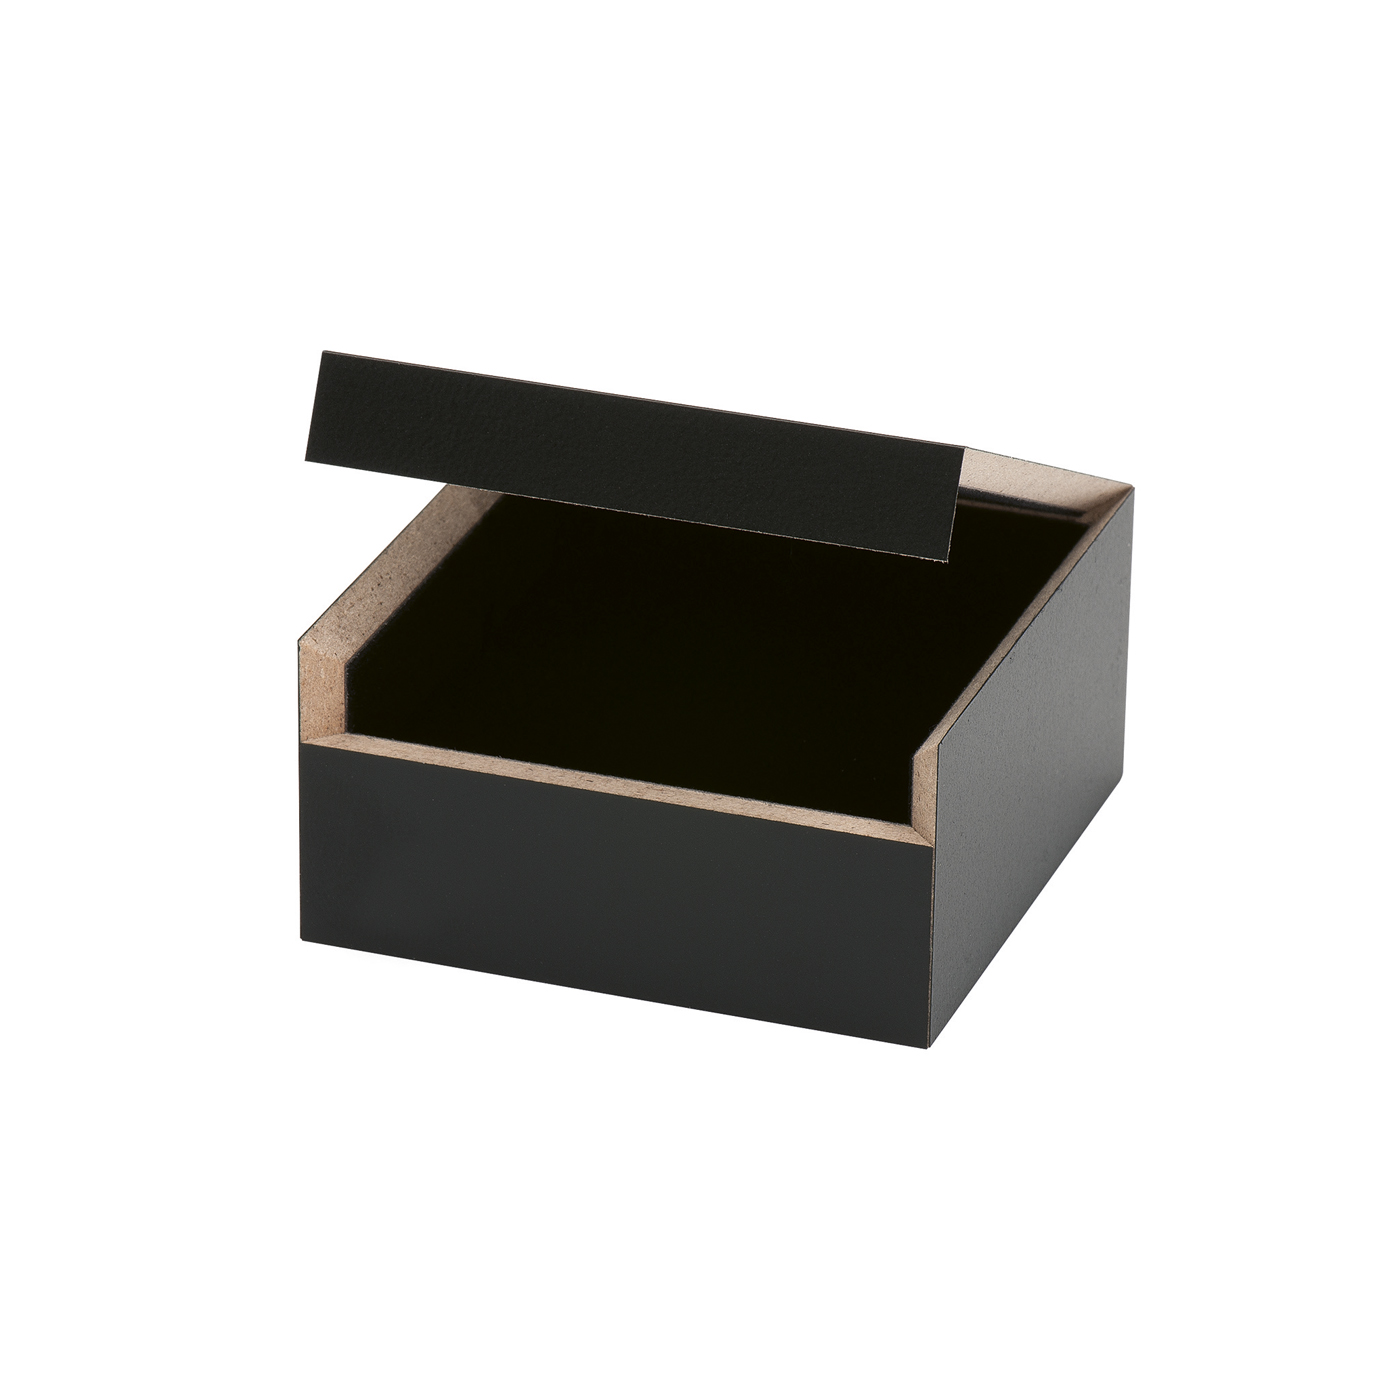 PICA-Design Schmucketui "Blackbox", 60 x 60 x 30 mm - 1 Stück